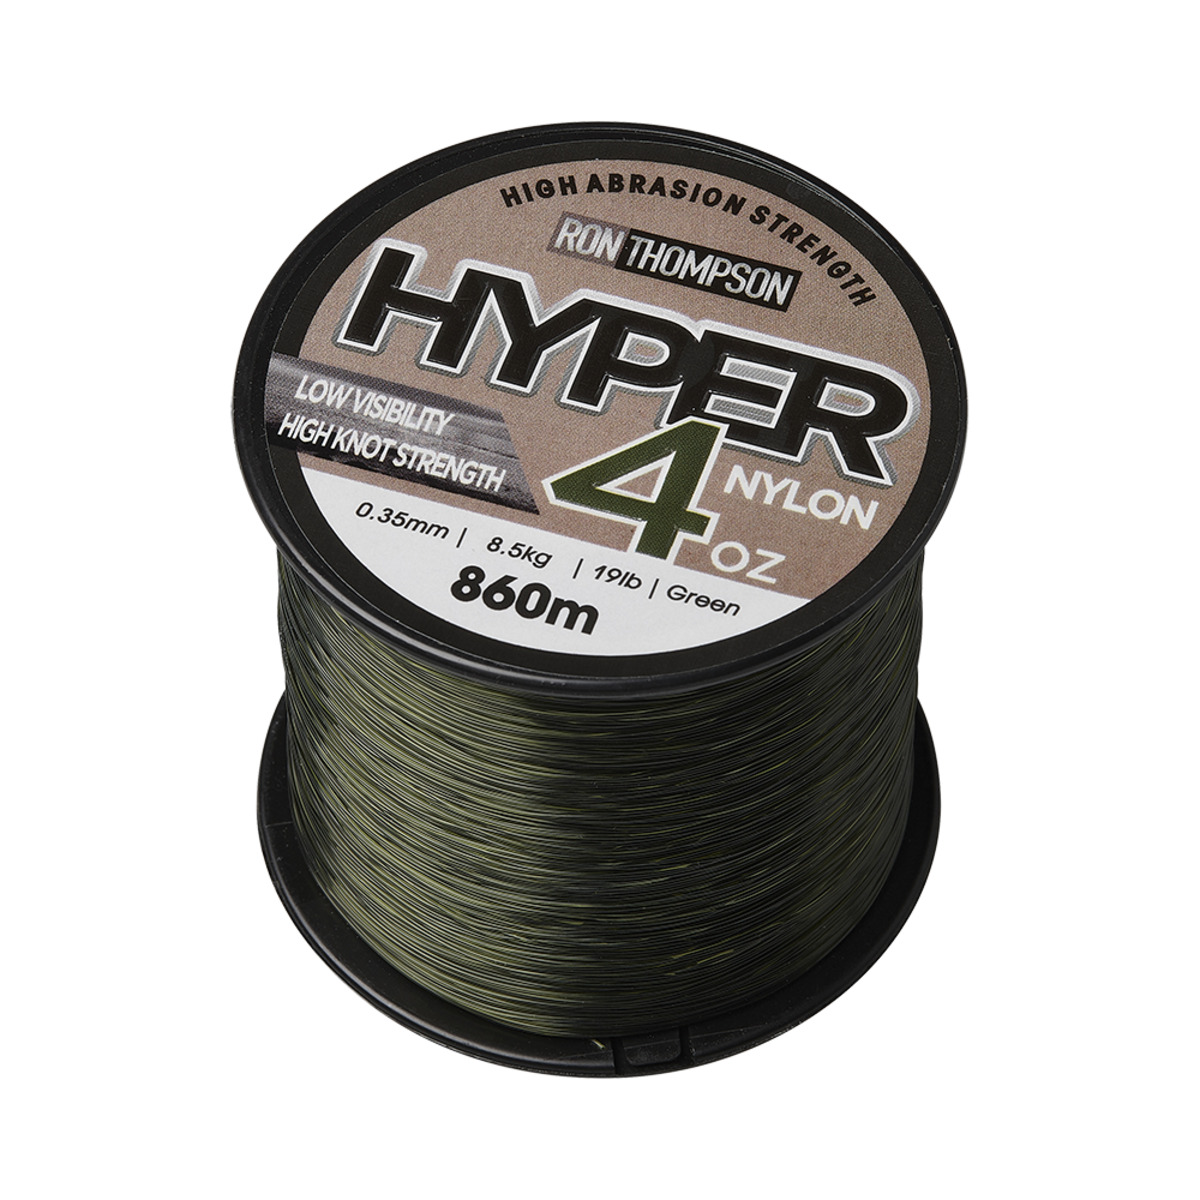 Ron Thompson Hyper 4oz Nylon - 860M 0.35MM 8.5KG 19LBS GREEN